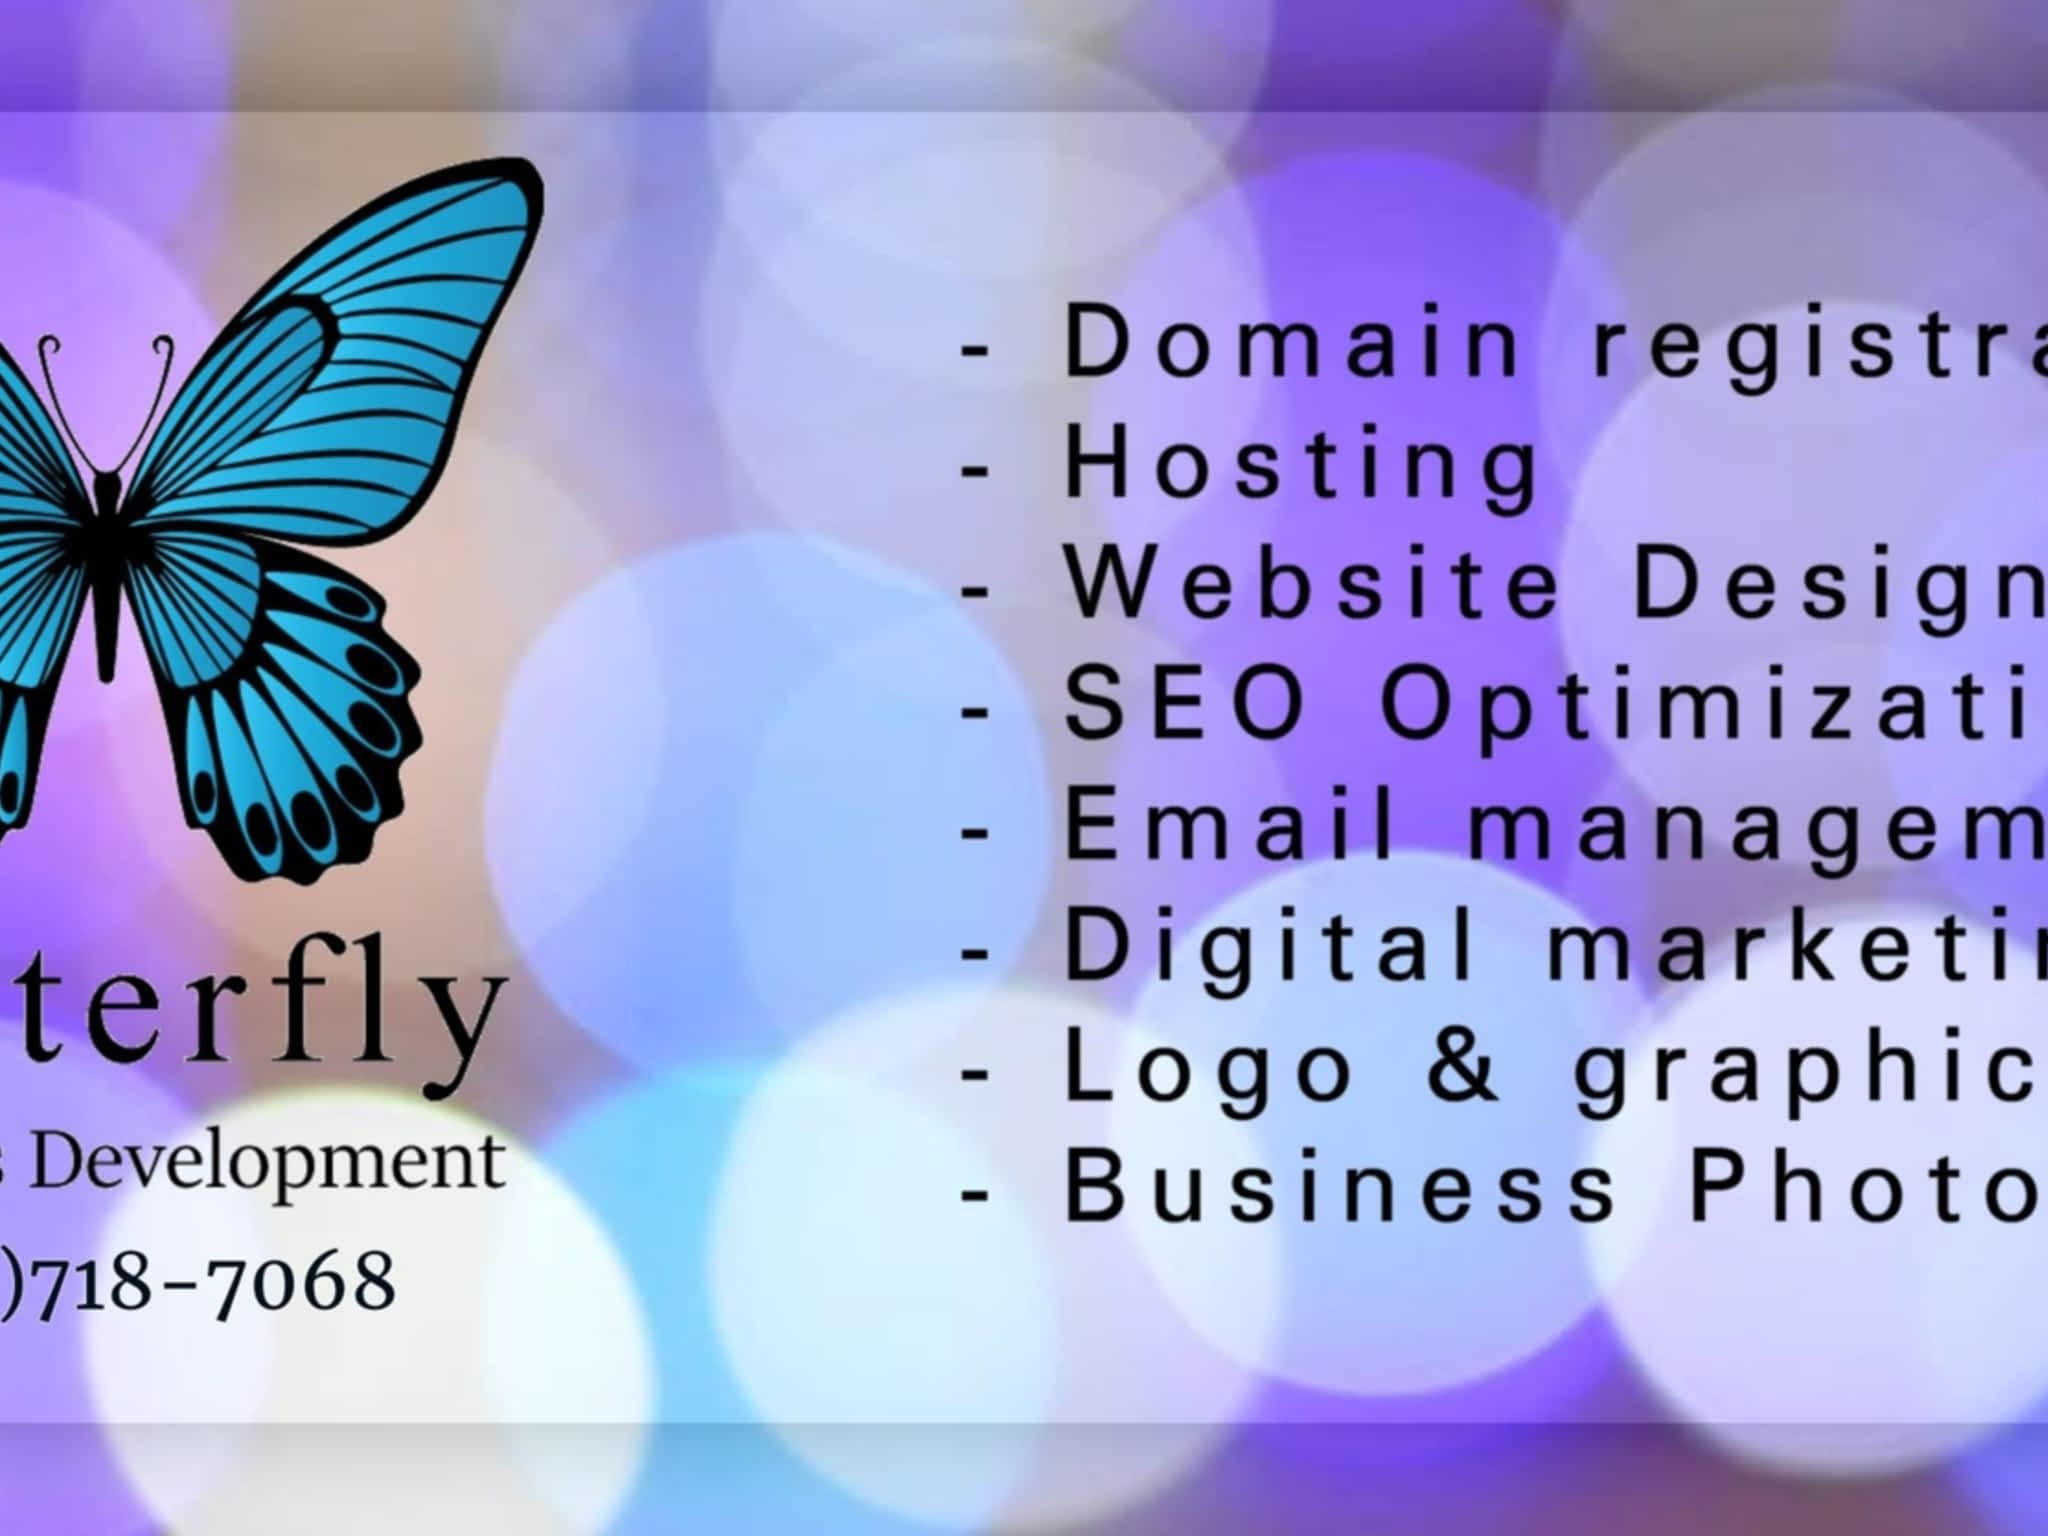 photo Butterfly Business Development